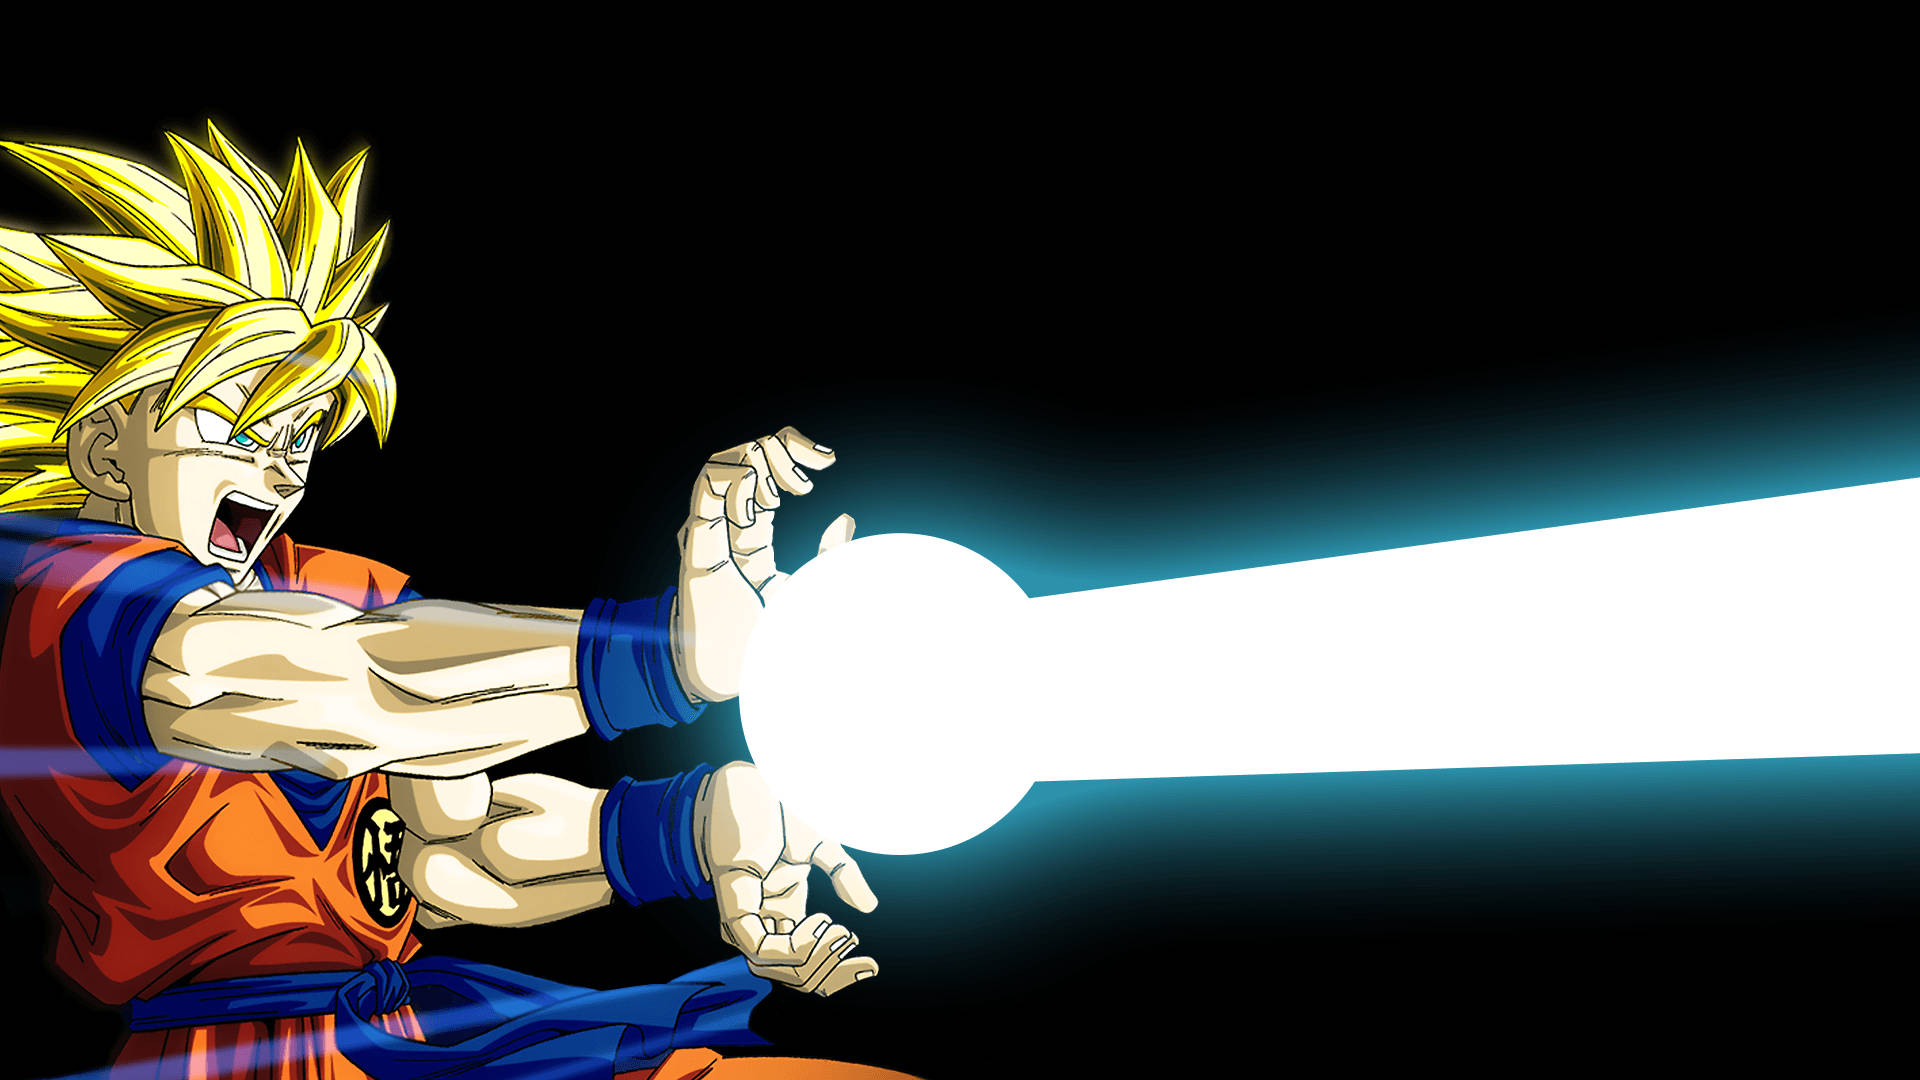 Goku unleashes his power in Dragon Ball Z Wallpaper